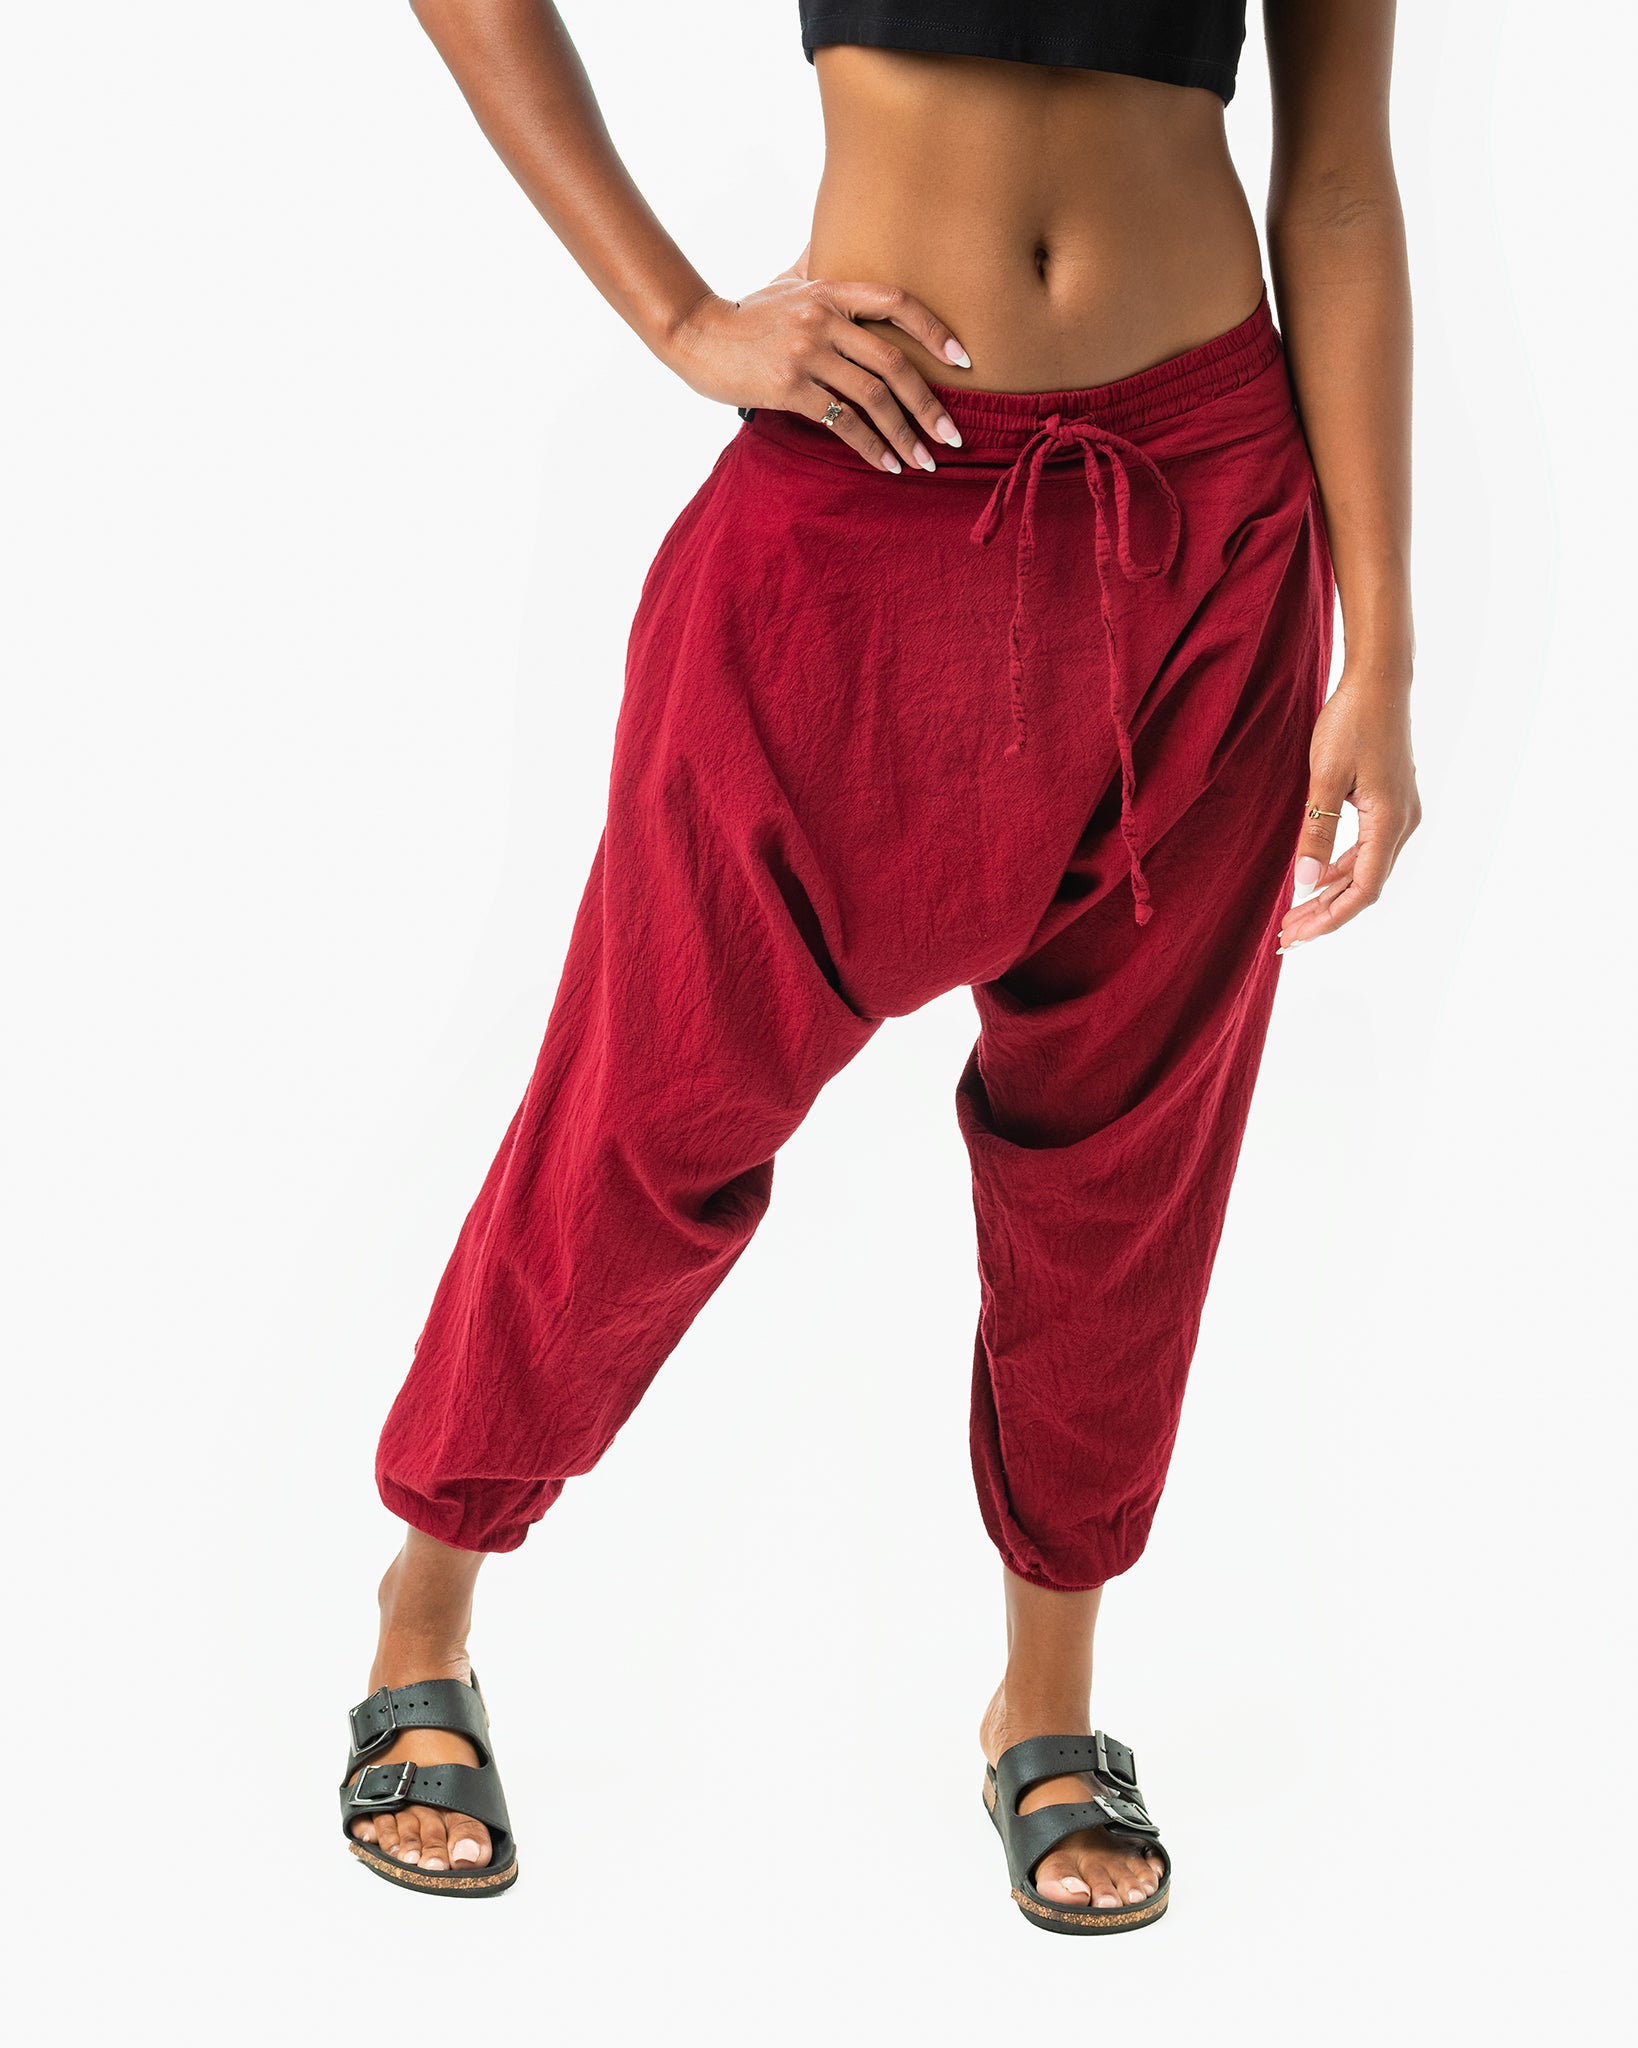 Arya Yoga Pants/ Black Drop Crotch Pants/ Yoga Clothes/ Cropped Yoga  Bottoms/ Women's Loose Yoga Pants by Aryasense/ PYS14BLK 